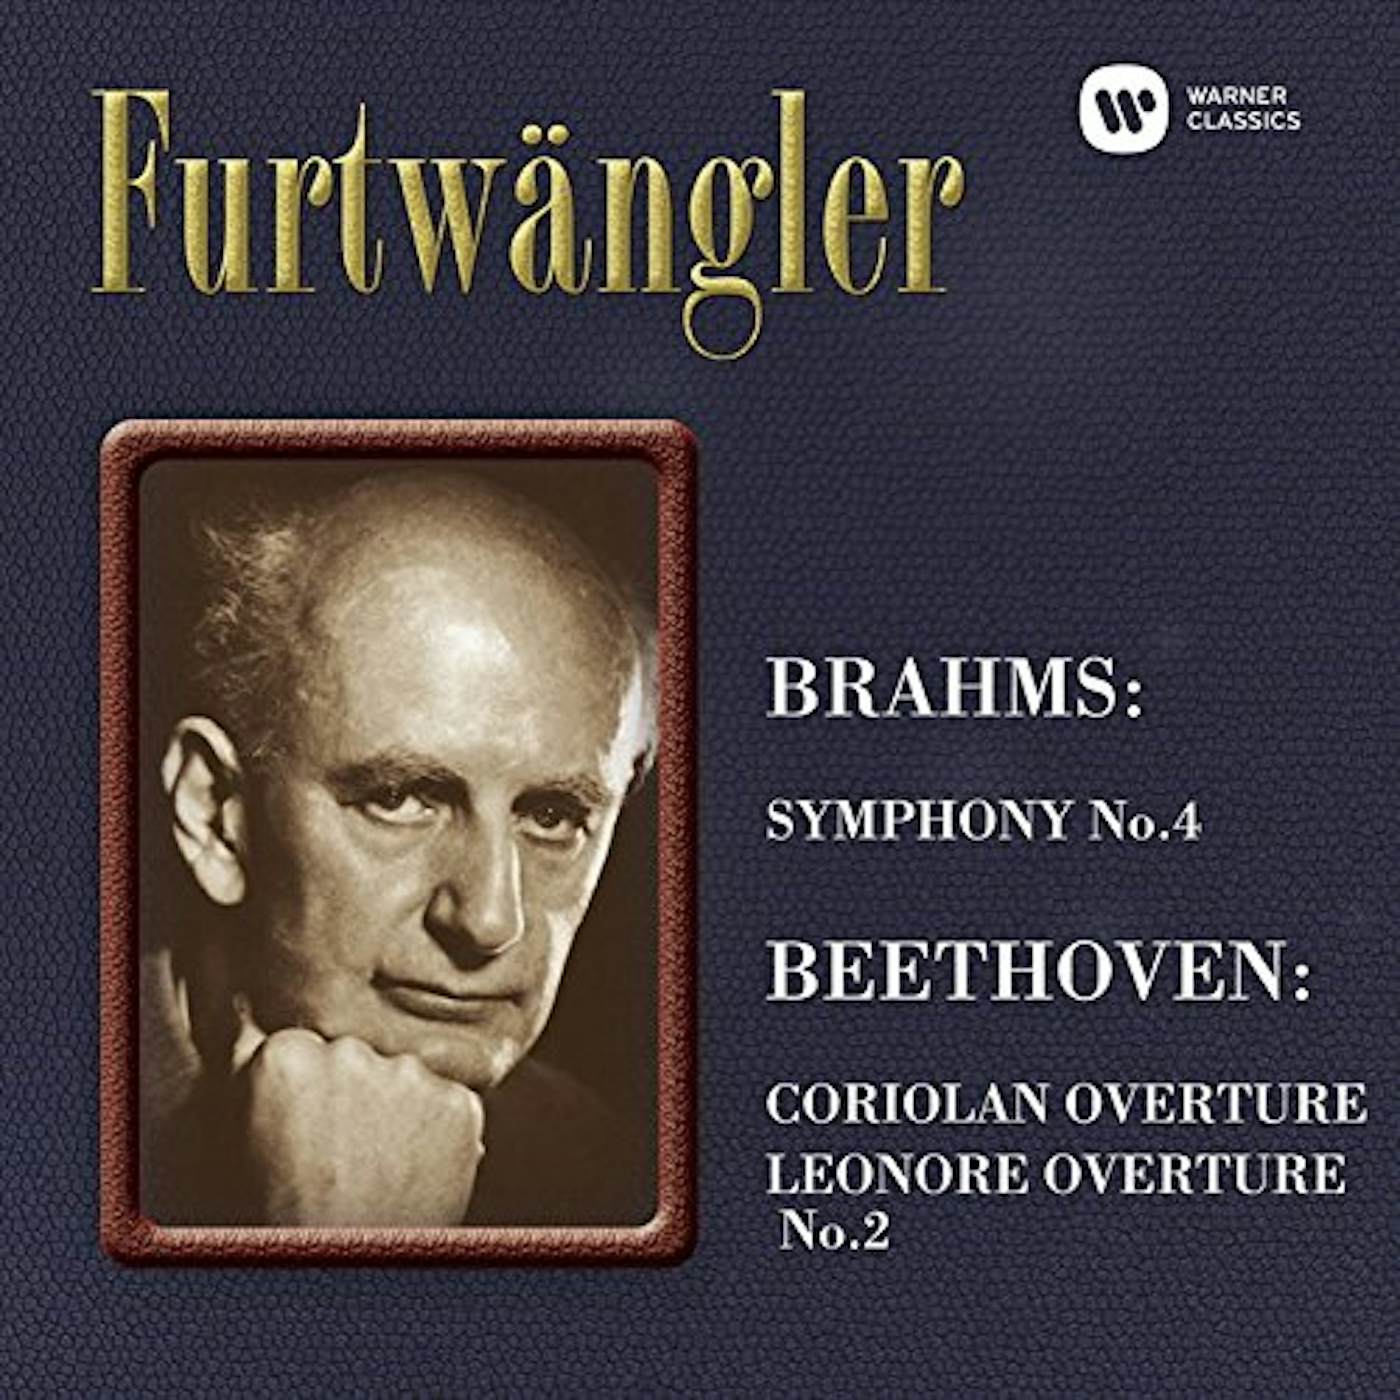 Wilhelm Furtwängler BRAHMS: SYMPHONY NO.4. ETC. Super Audio CD